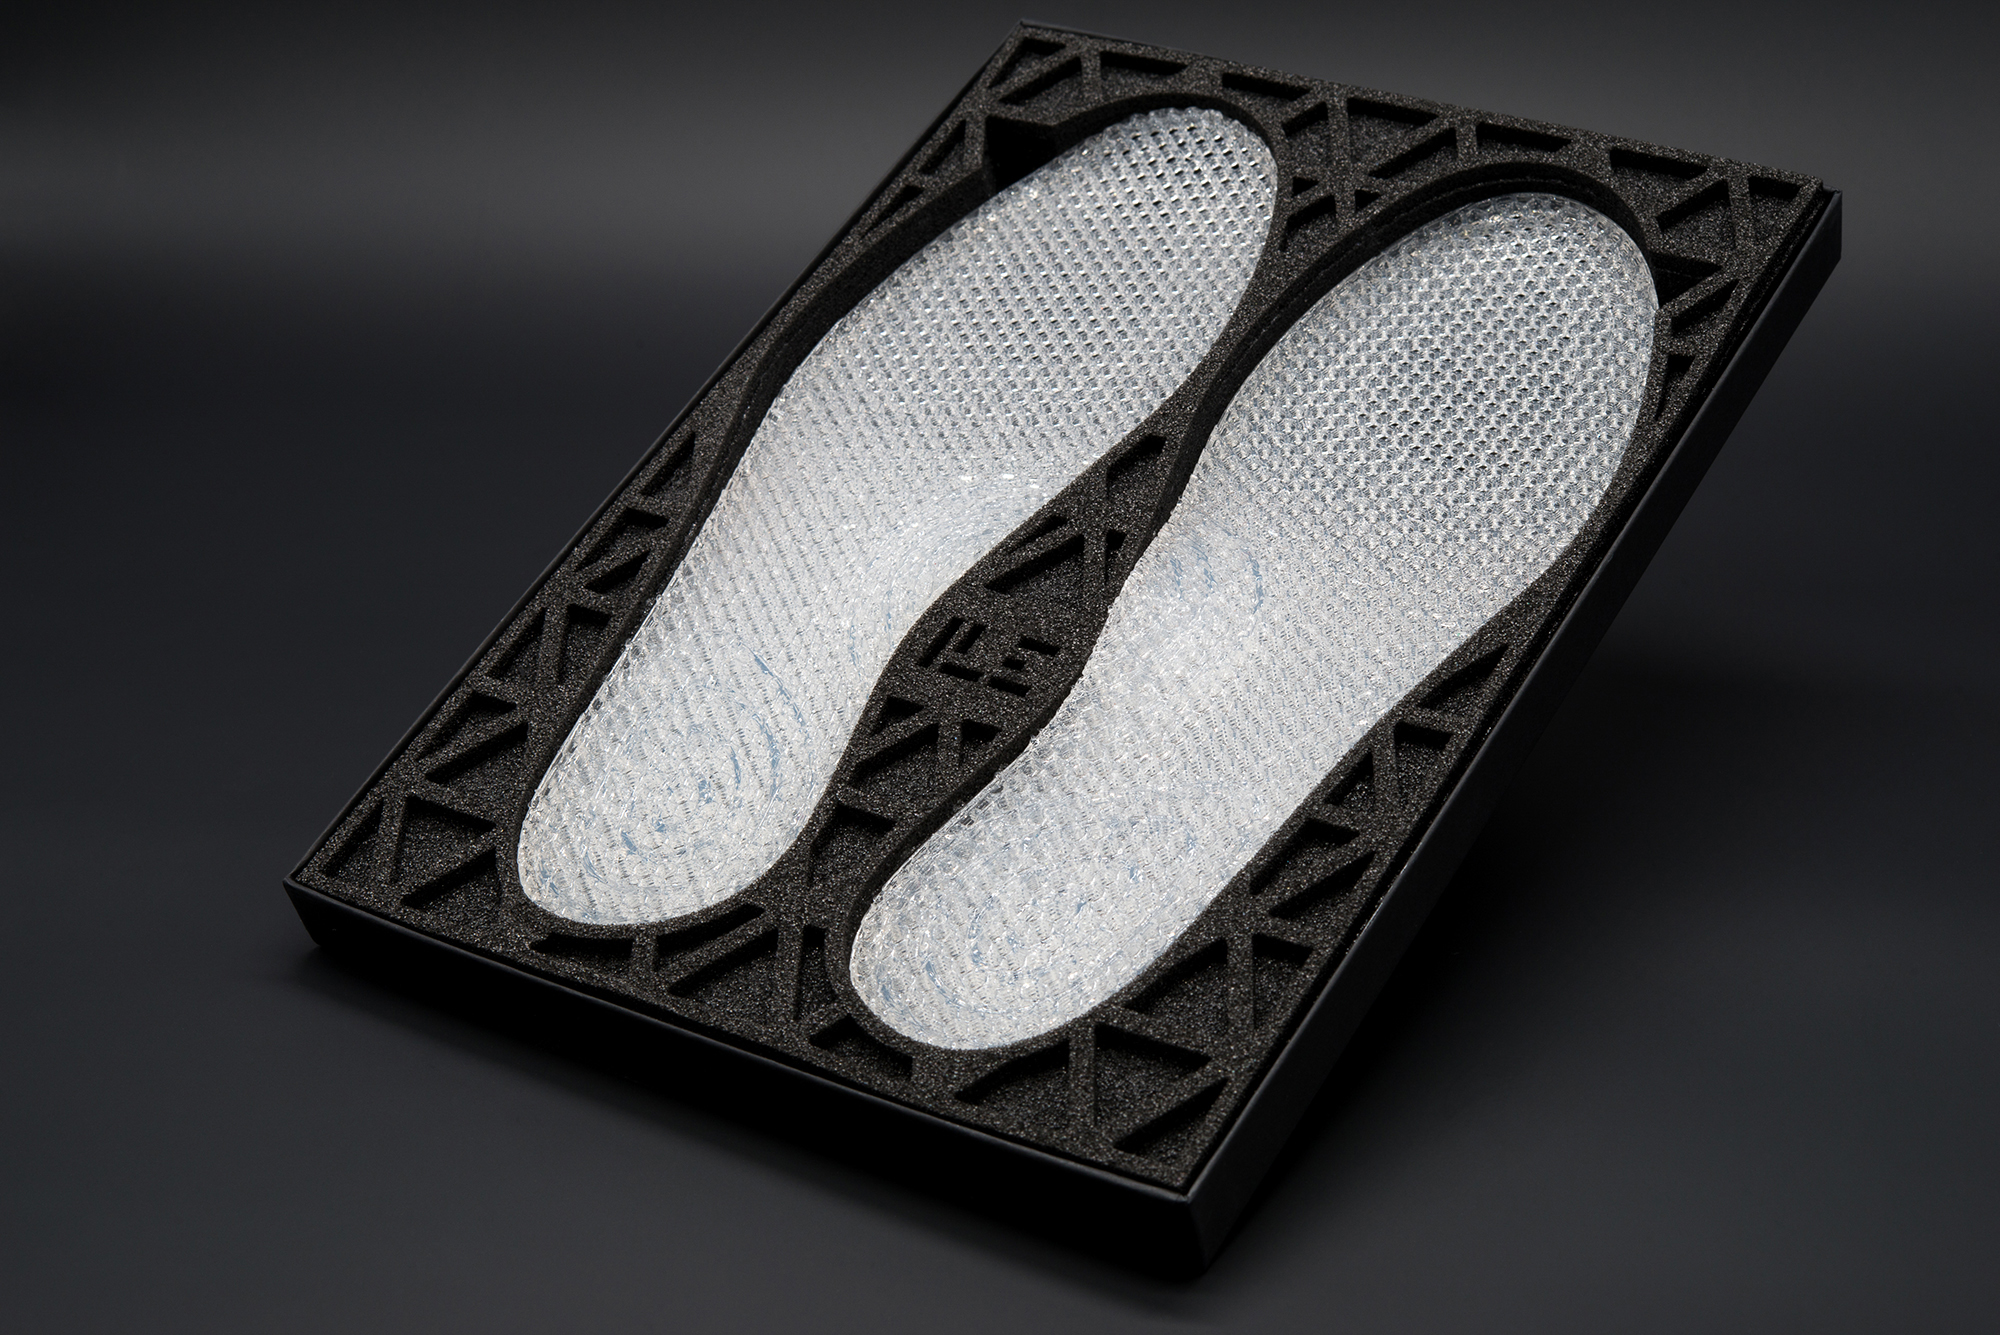 3d подошва. Ecco 3d Print. 3d обувь heignt. Ecco 3d Printing. 3д стельки ортопедические самонастраиваемые.